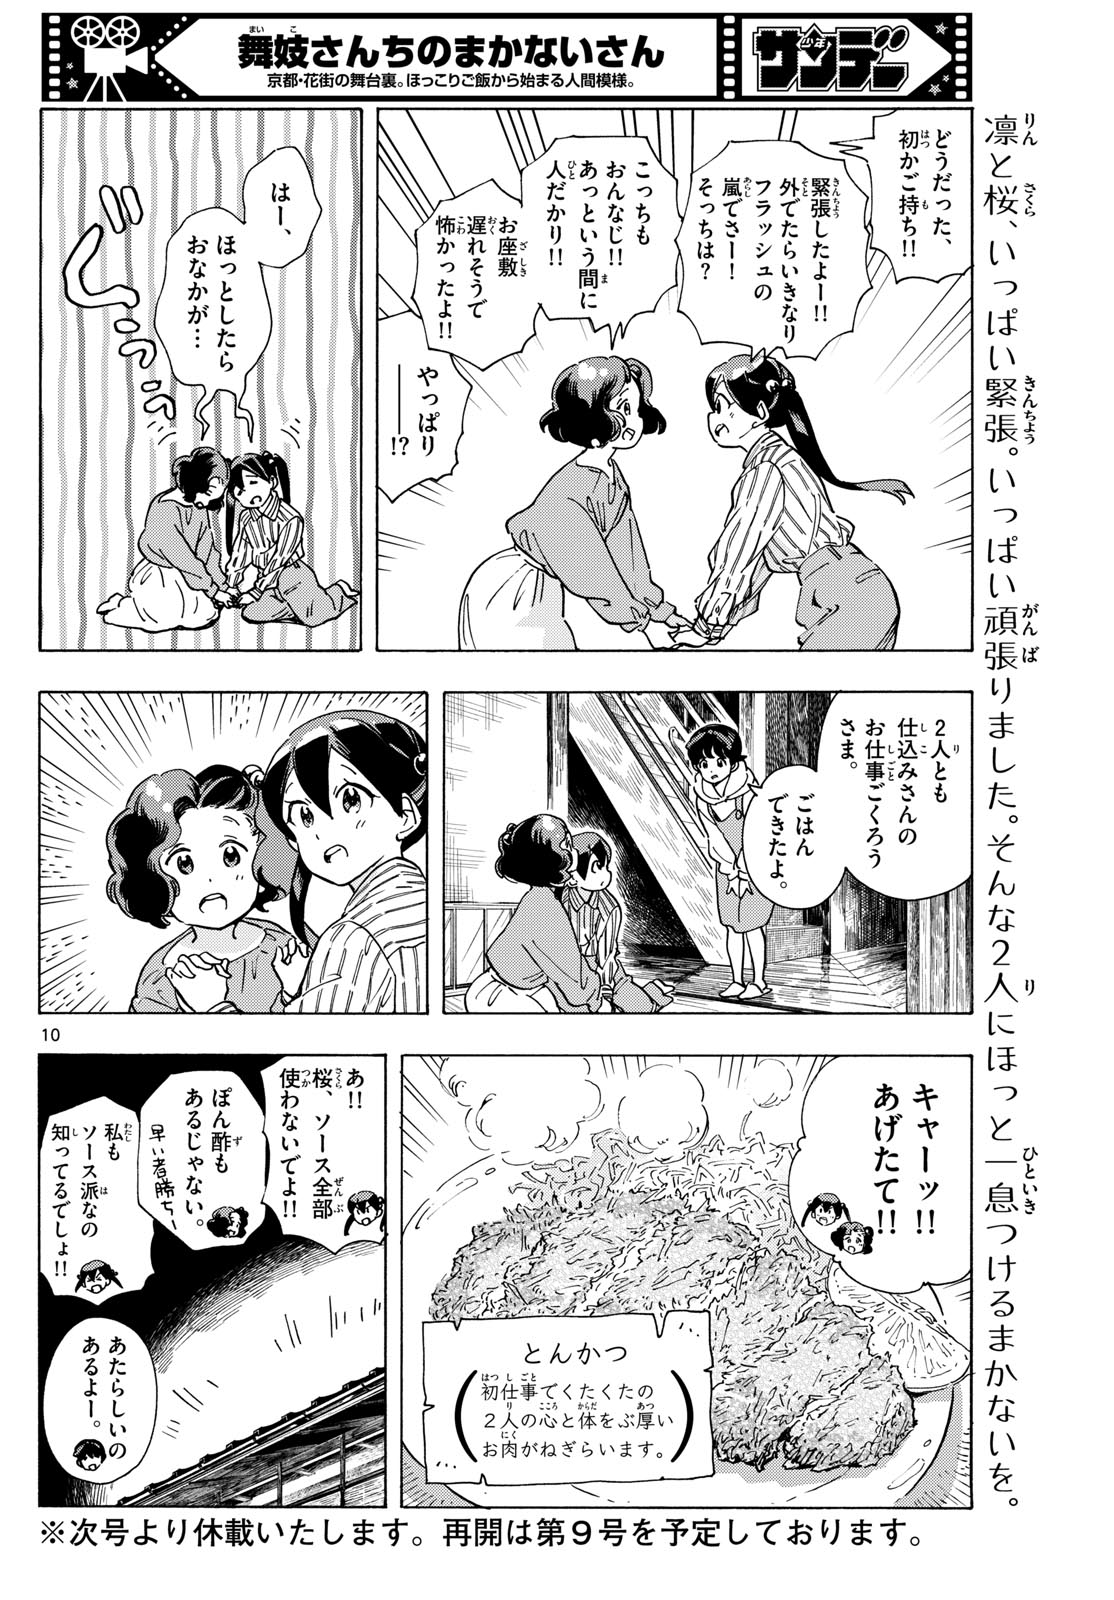 Maiko-san Chi no Makanai-san - Chapter 290 - Page 10